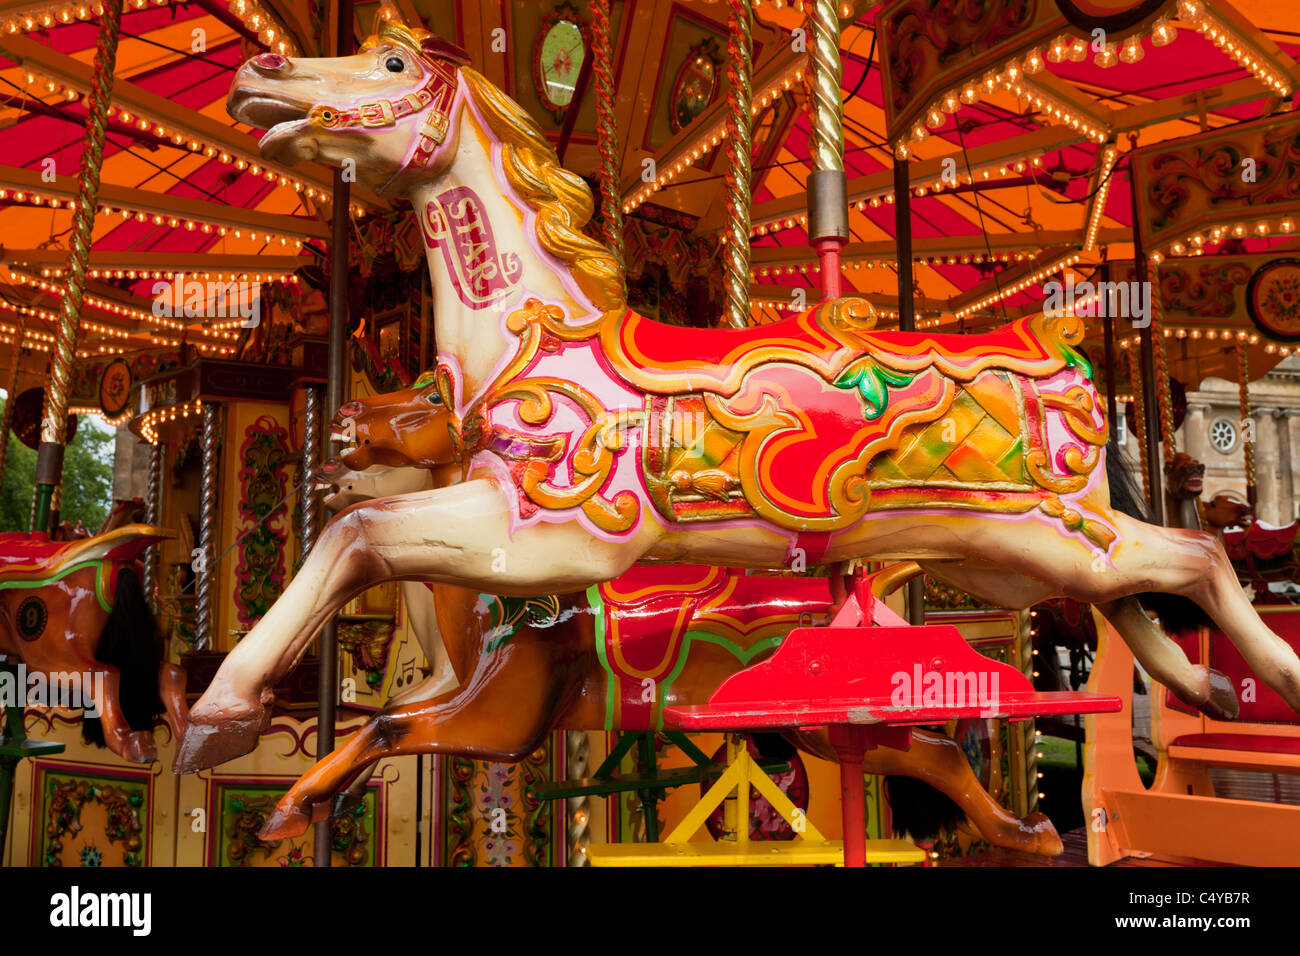 Fairground Horses on a Merry -go-round  funfair ride amusement park  England GB UK EU europe Stock Photo